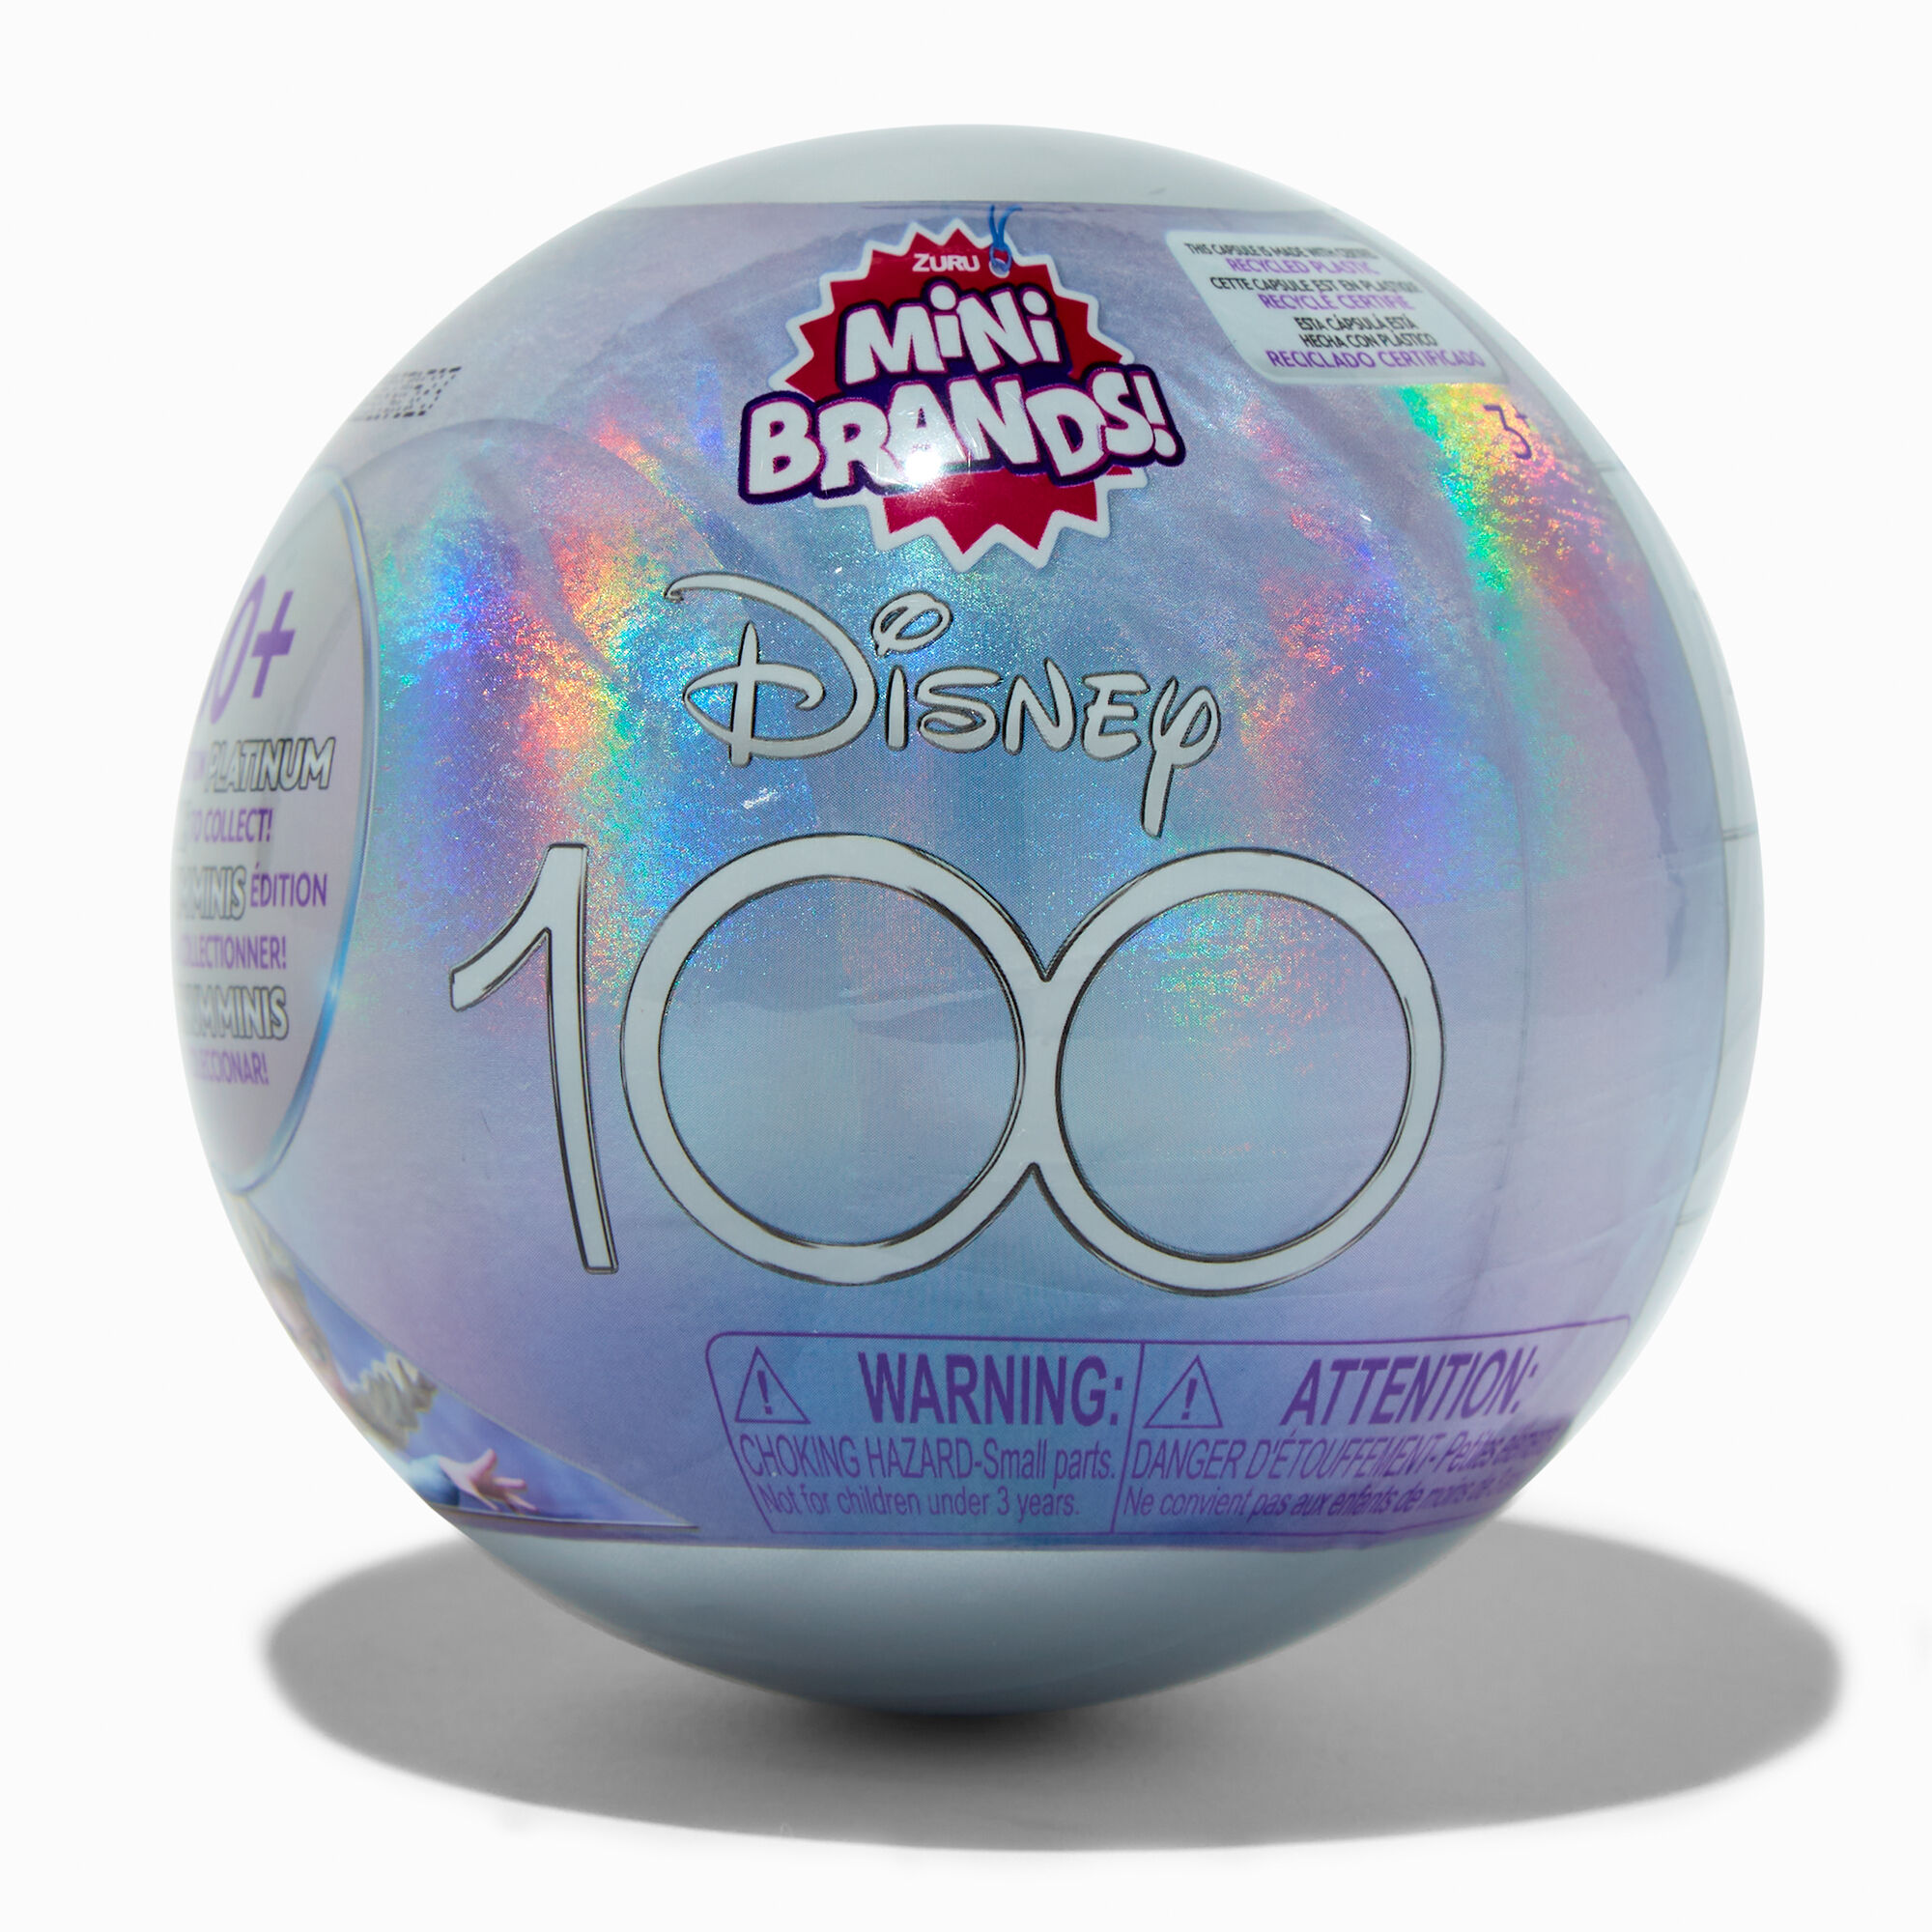 5 Surprise Mini Brands! Disney 100 Platinum Mystery Pack (Limited Edition)